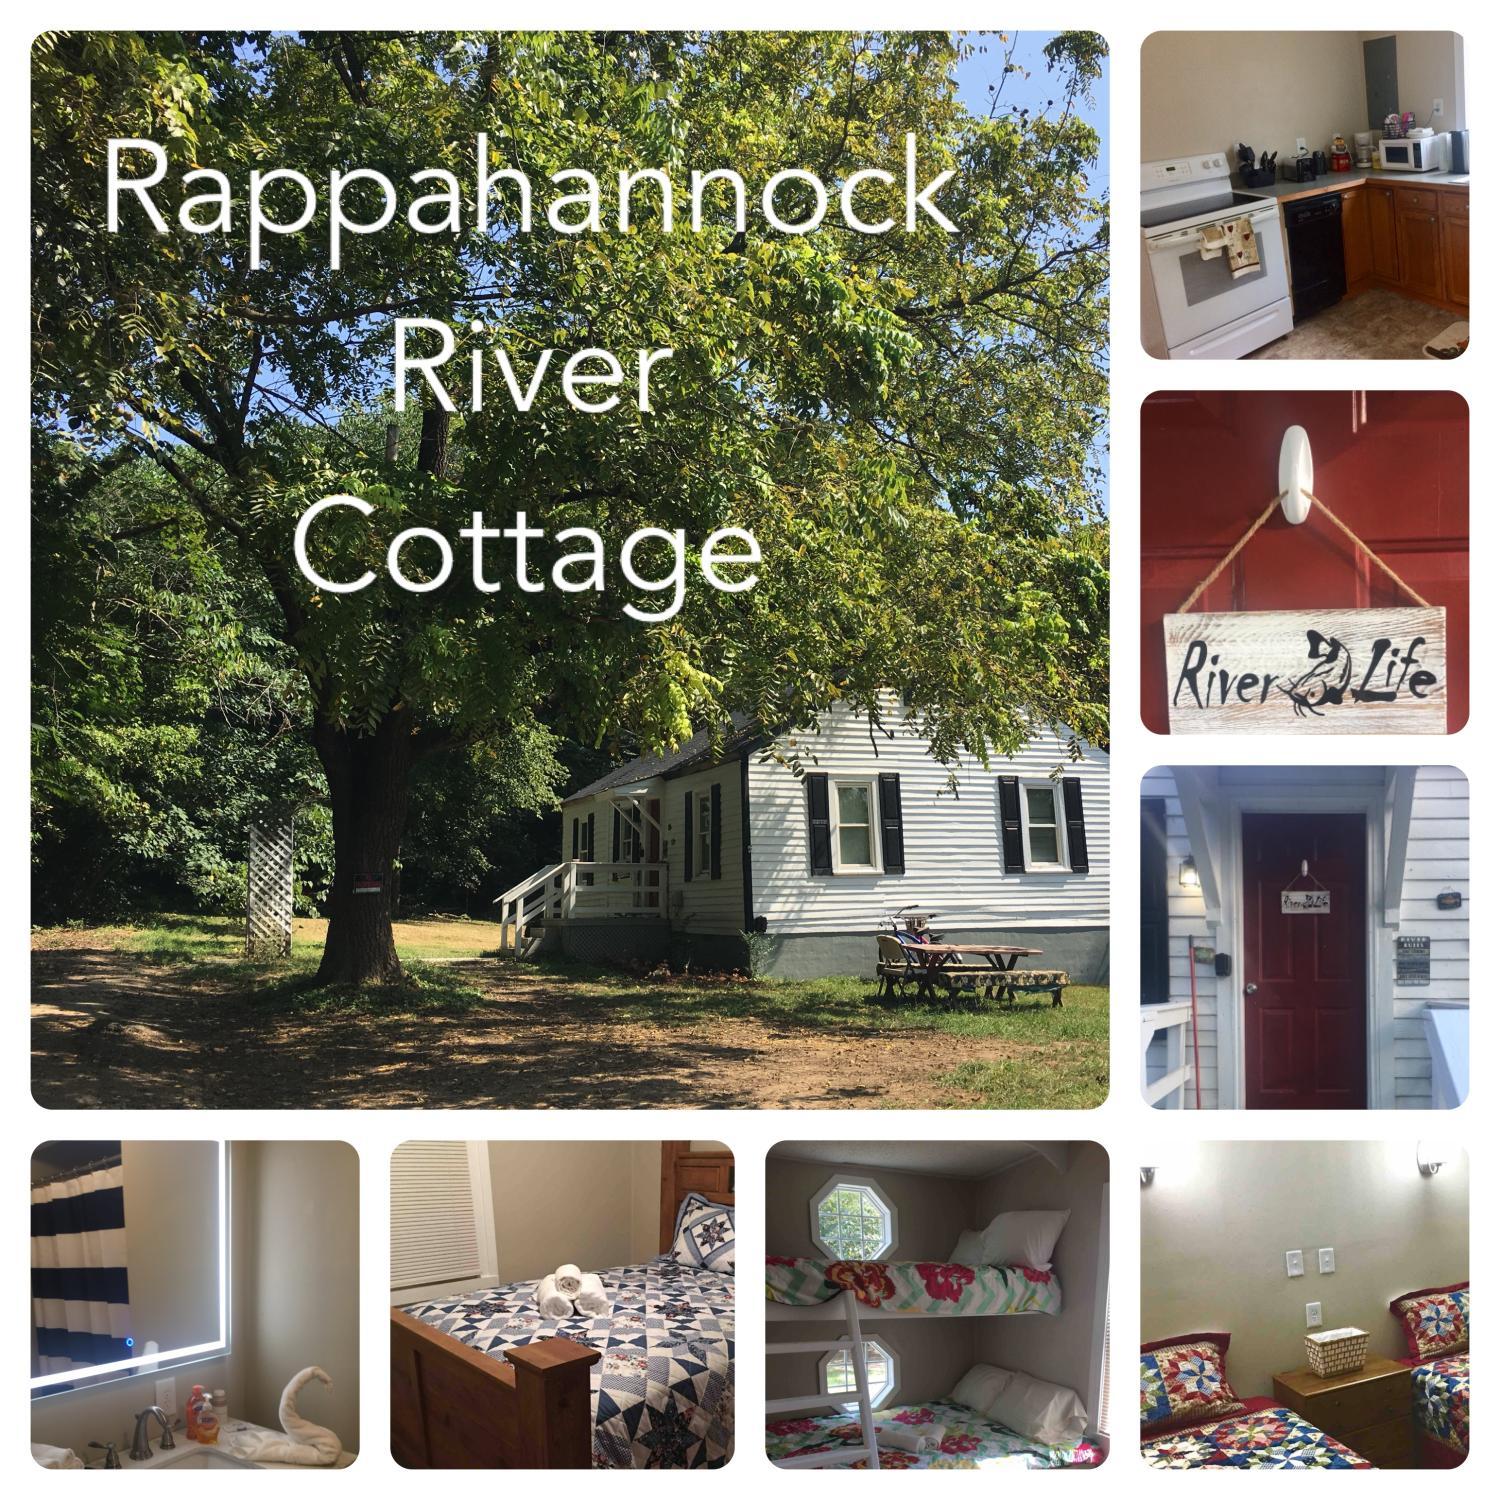 Rappahannock River Cottage Near I-95!, Stafford